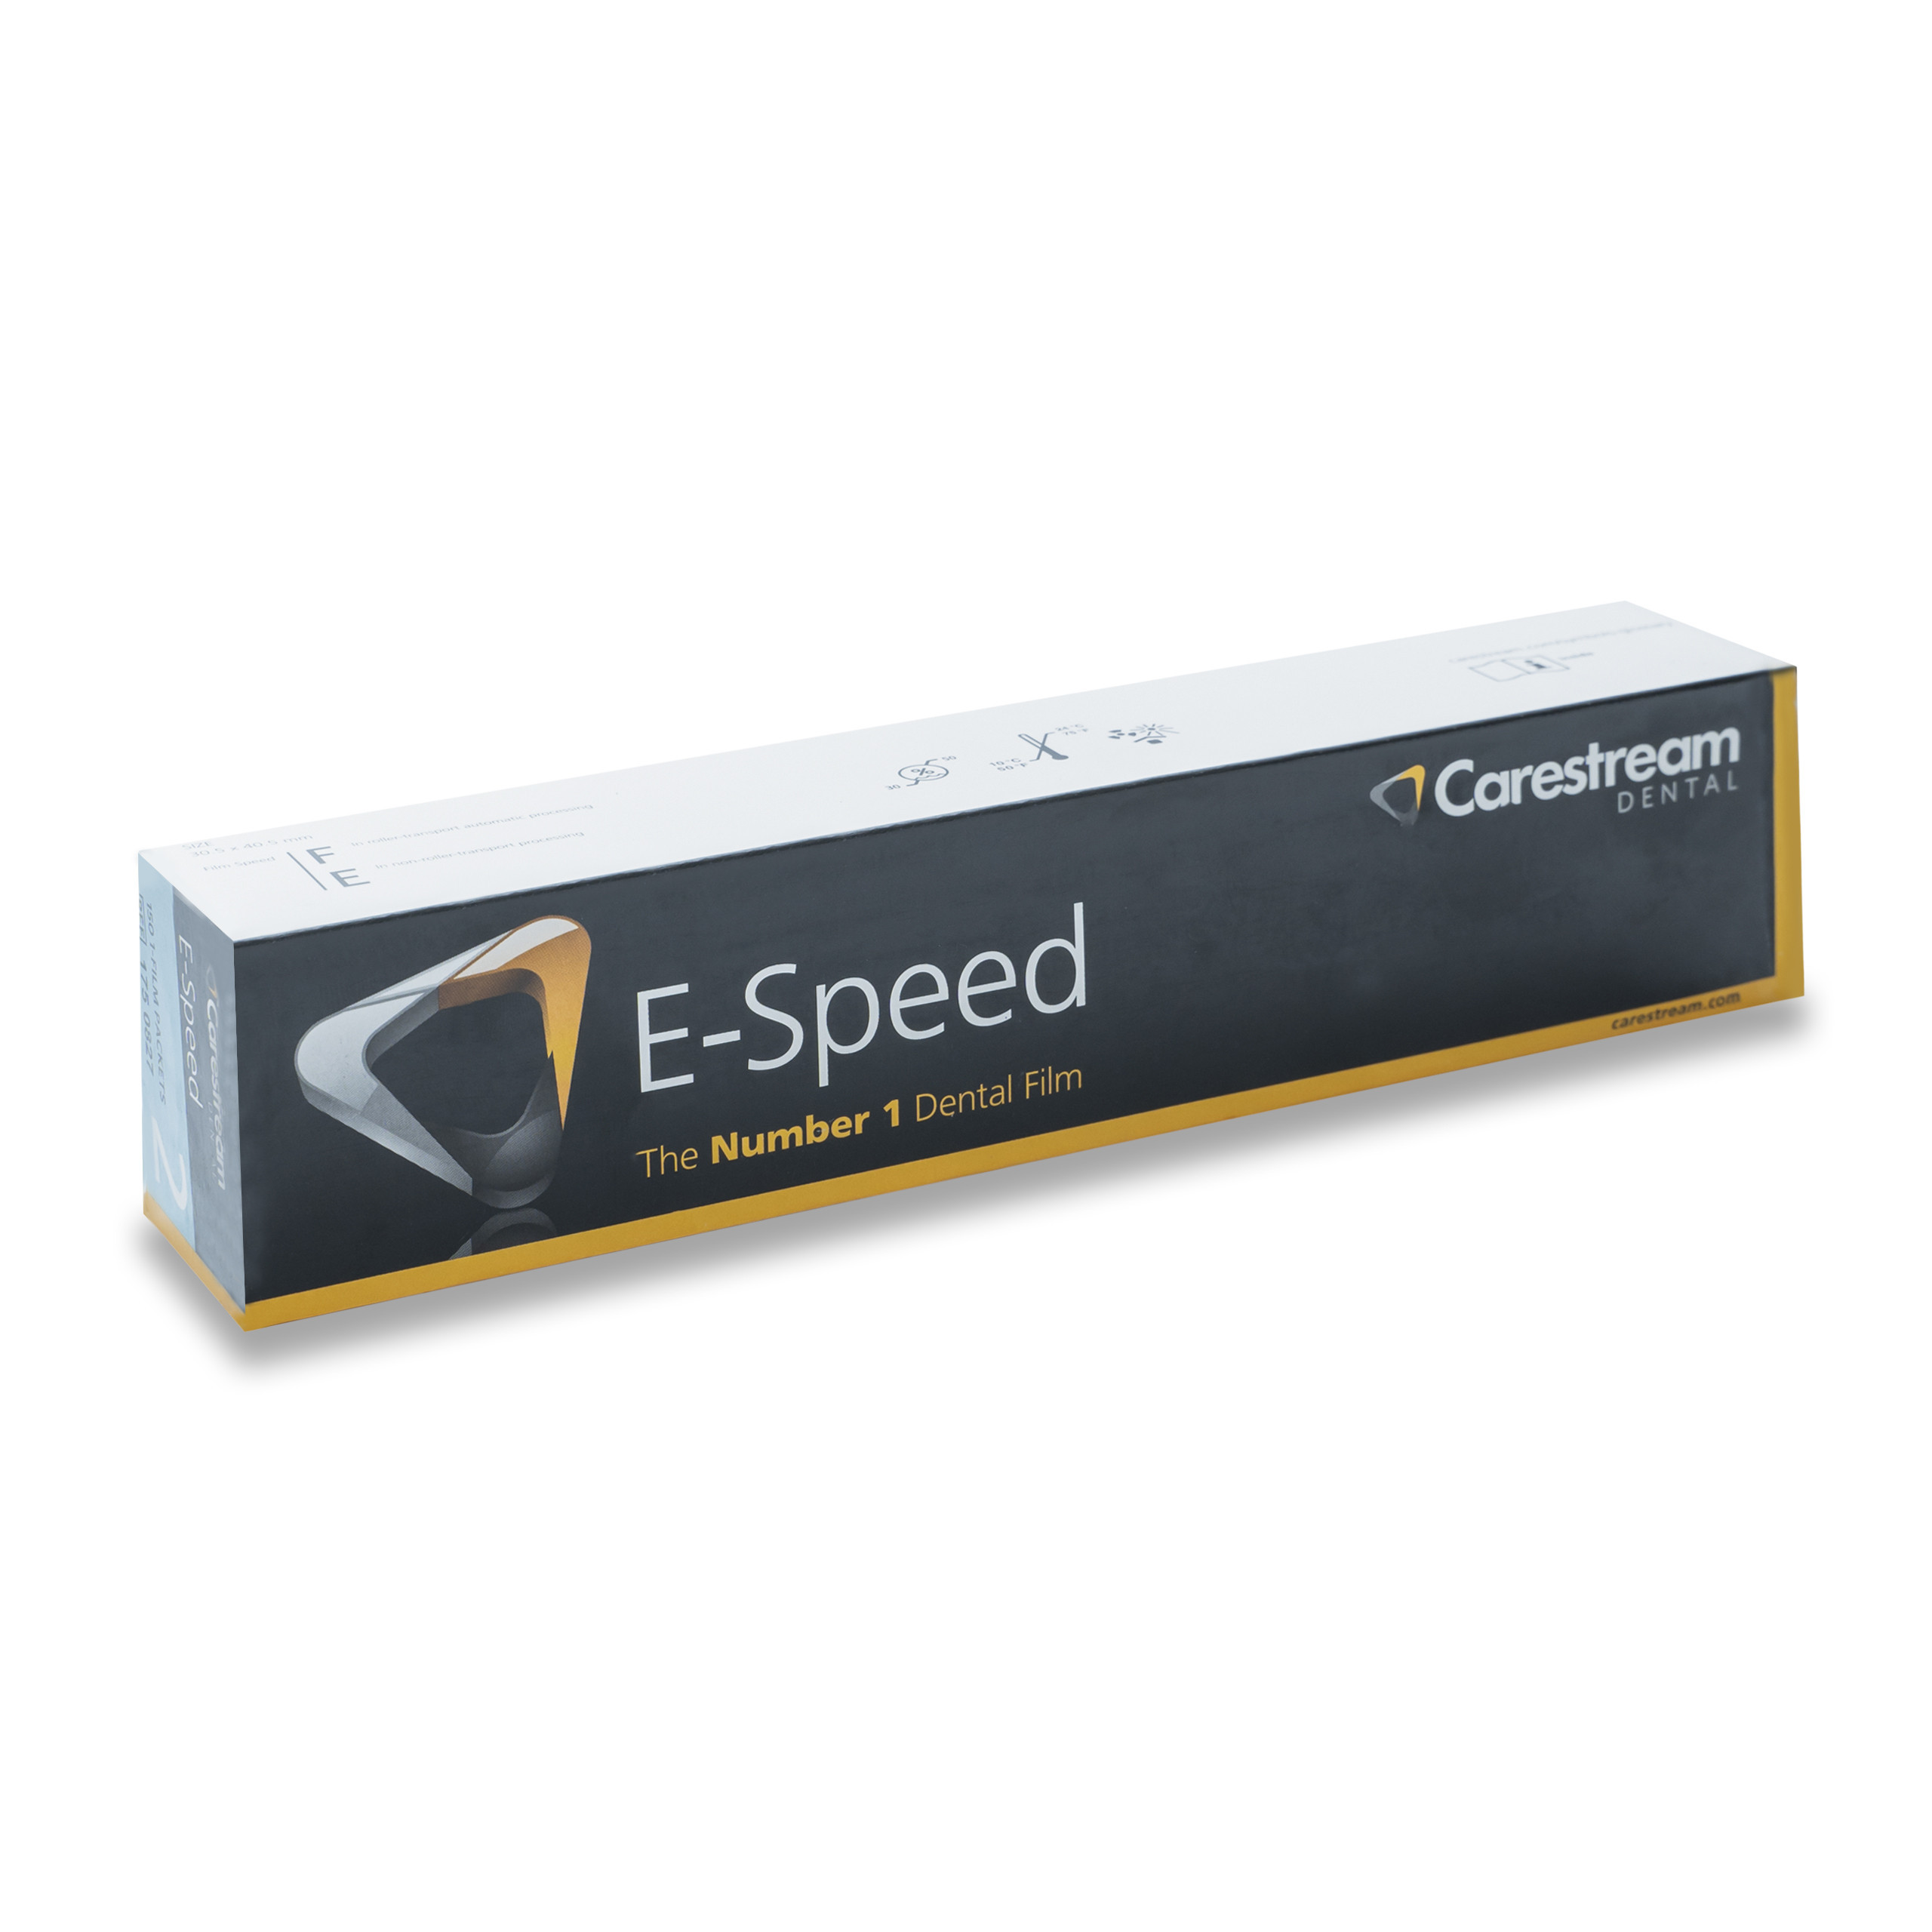 Carestream E-speed xray